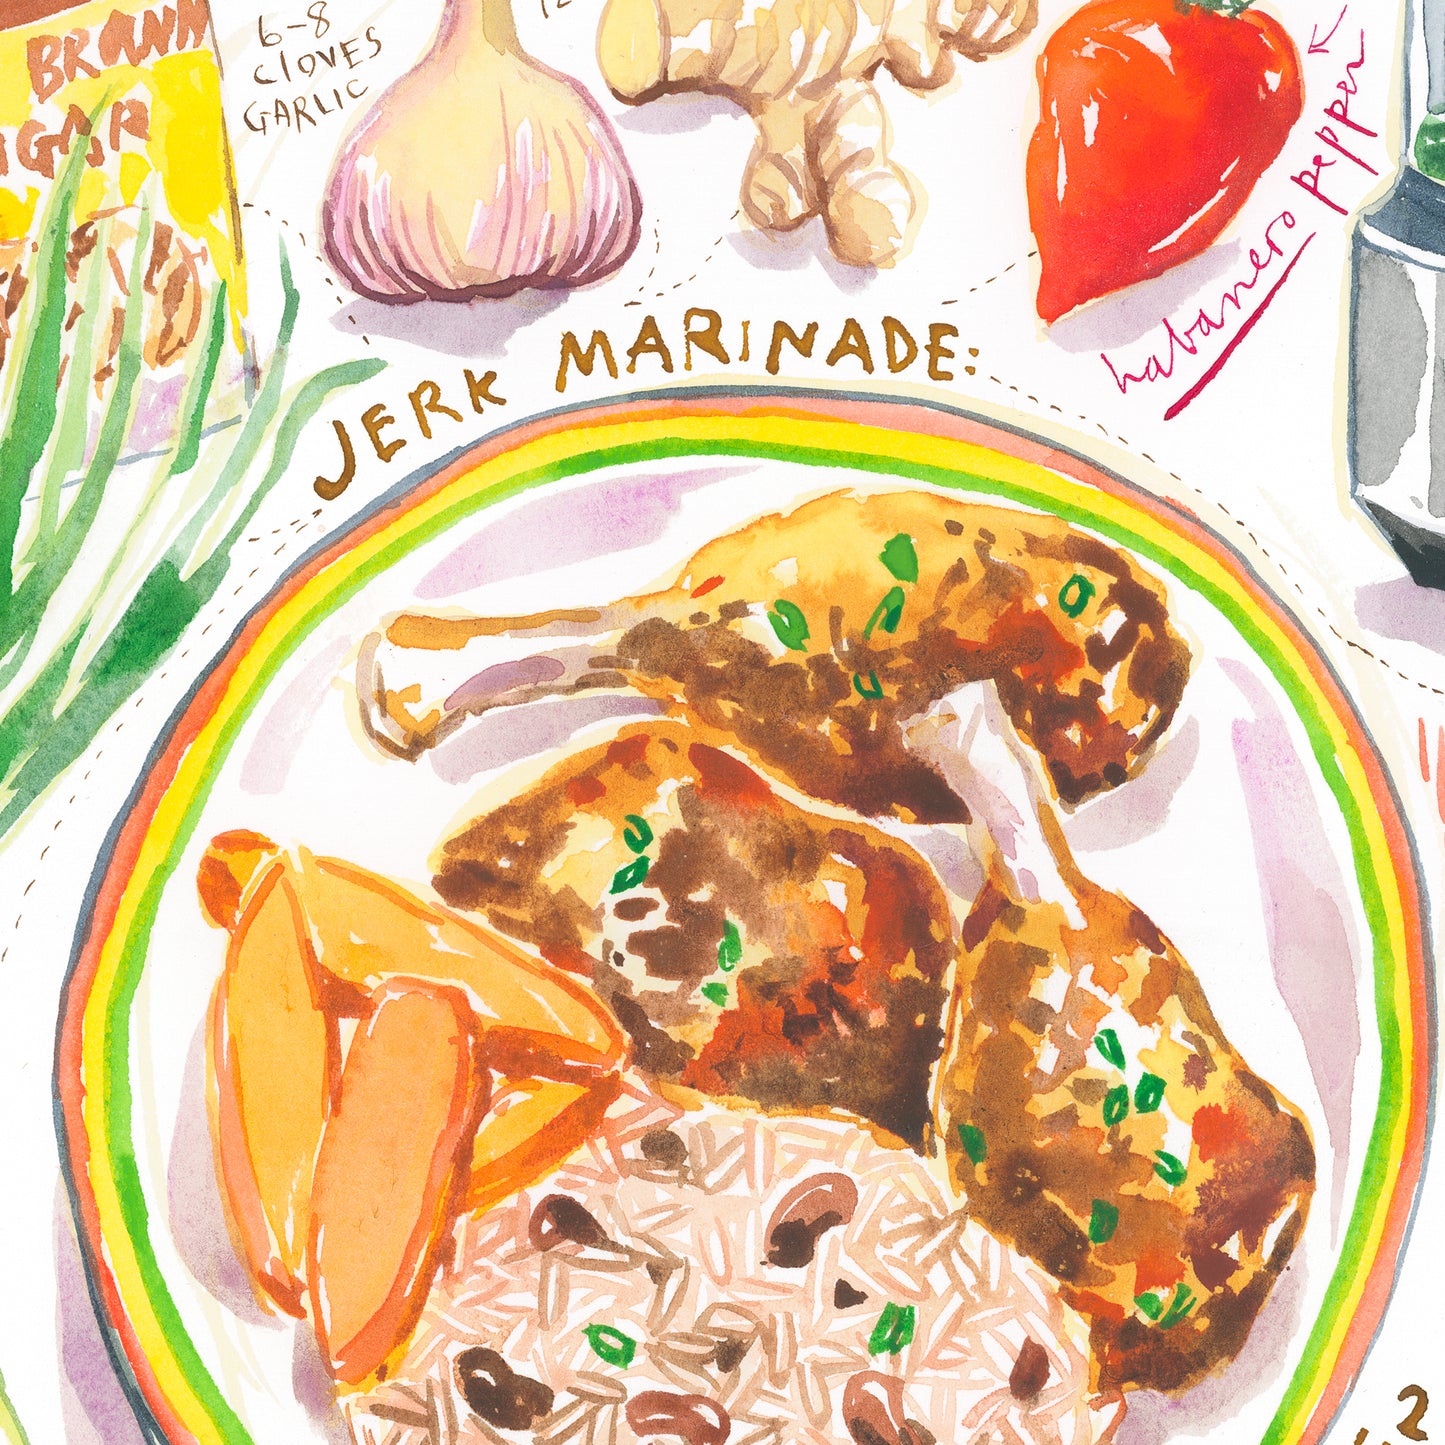 Jerk Chicken recipe. Original watercolor painting